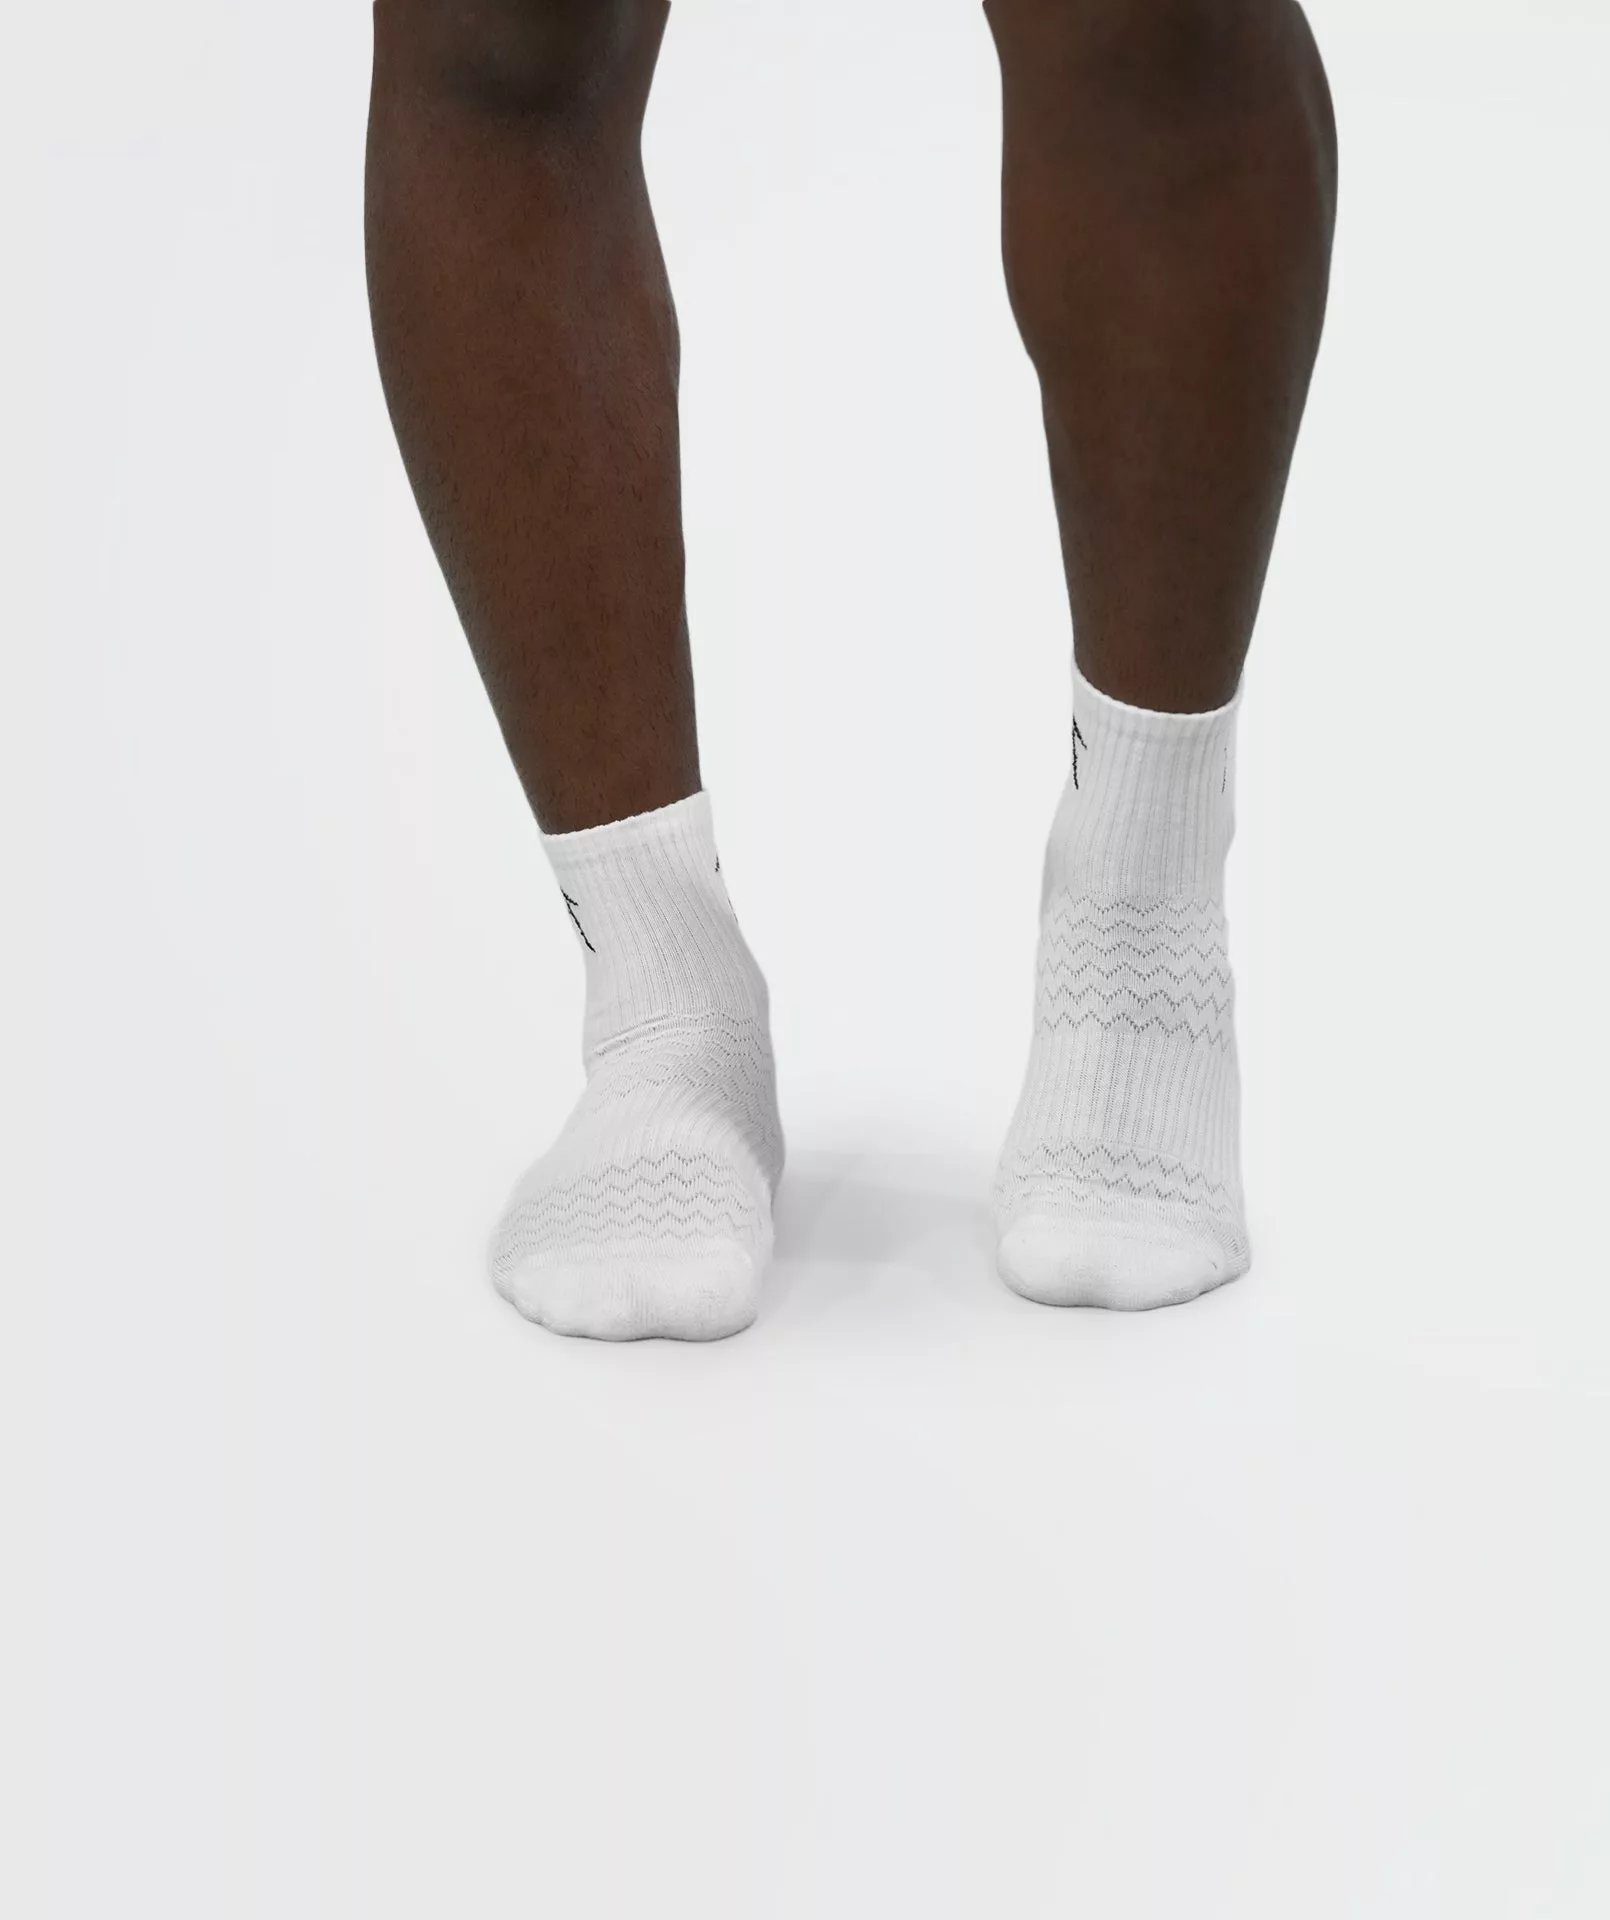 Unisex Short Crew Cotton Socks - Pack of 3 image 1